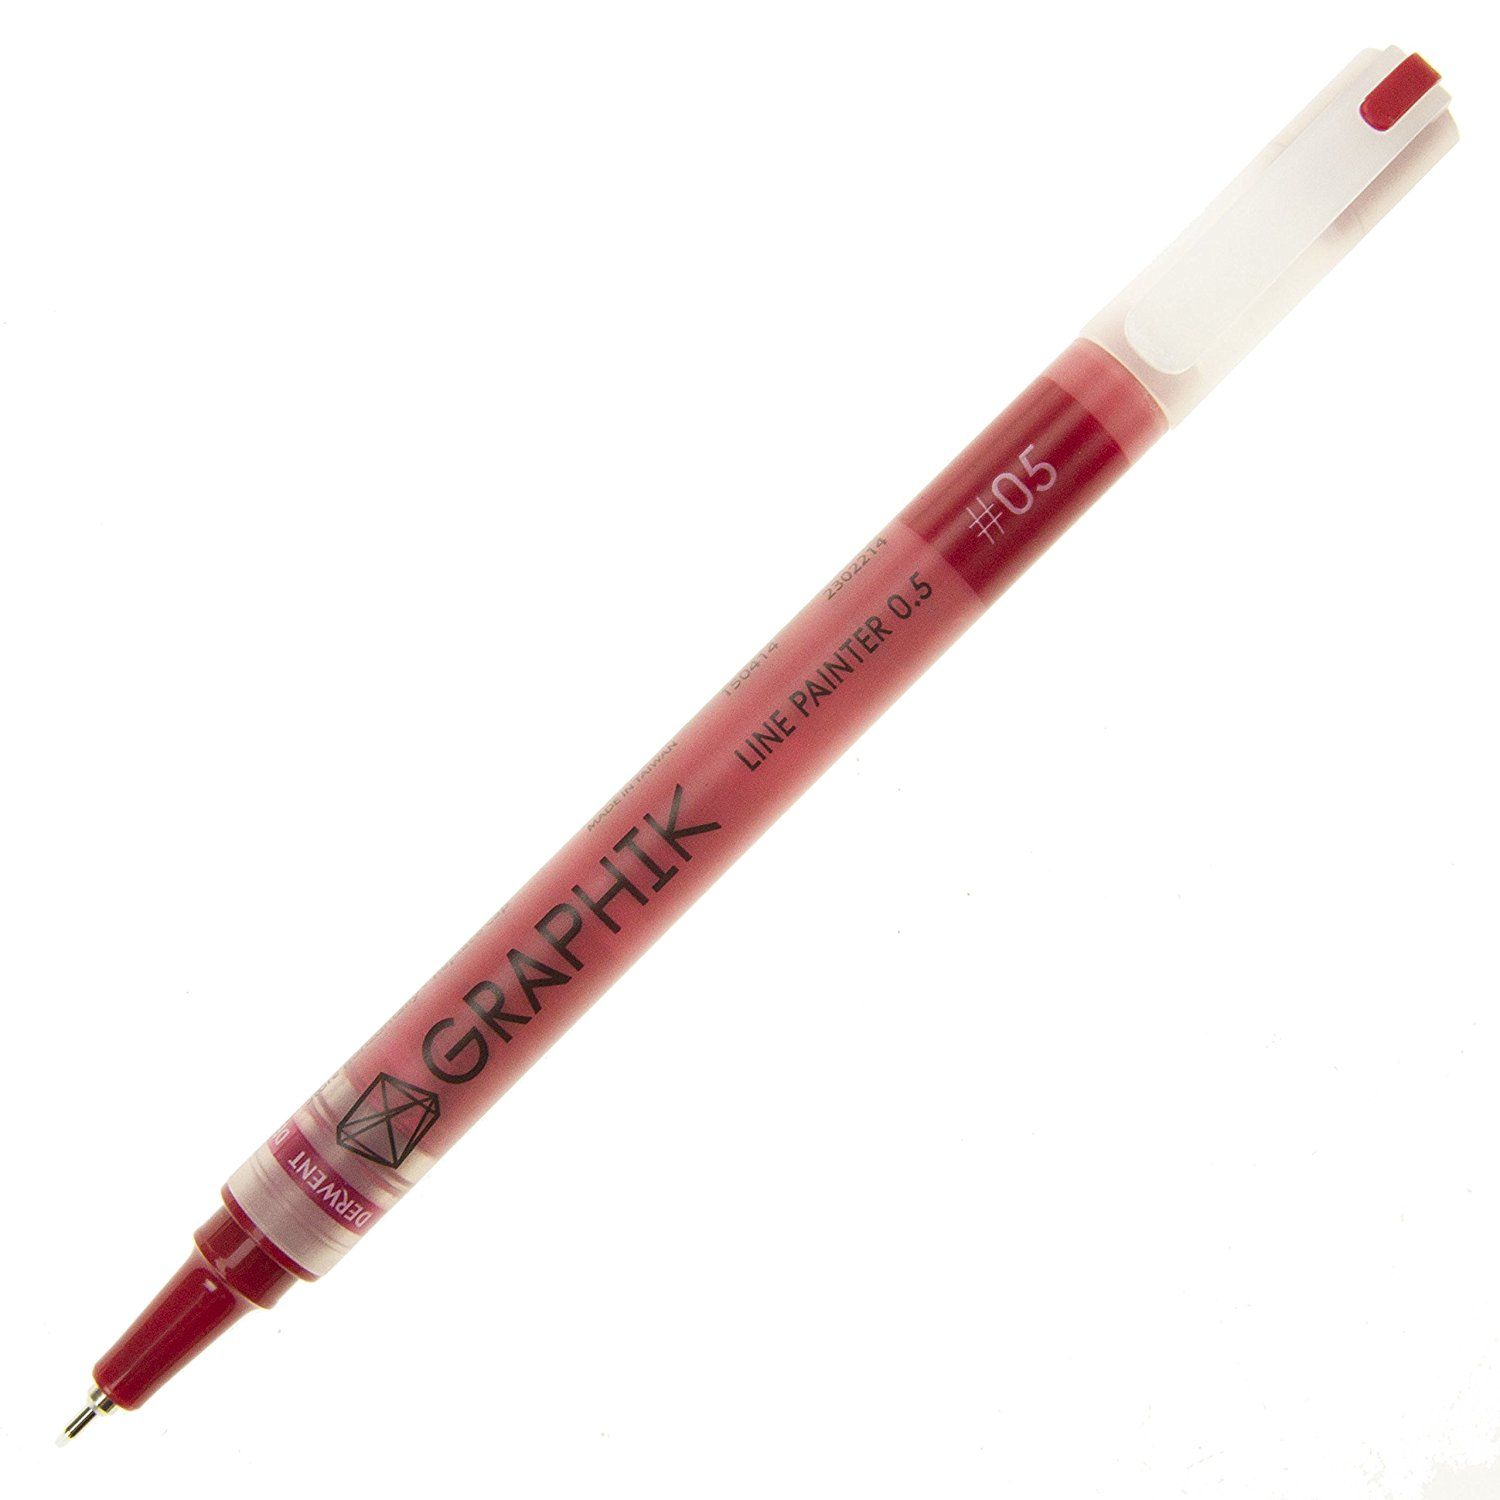 Derwent Graphik Line Painter Pen - #05 Blood